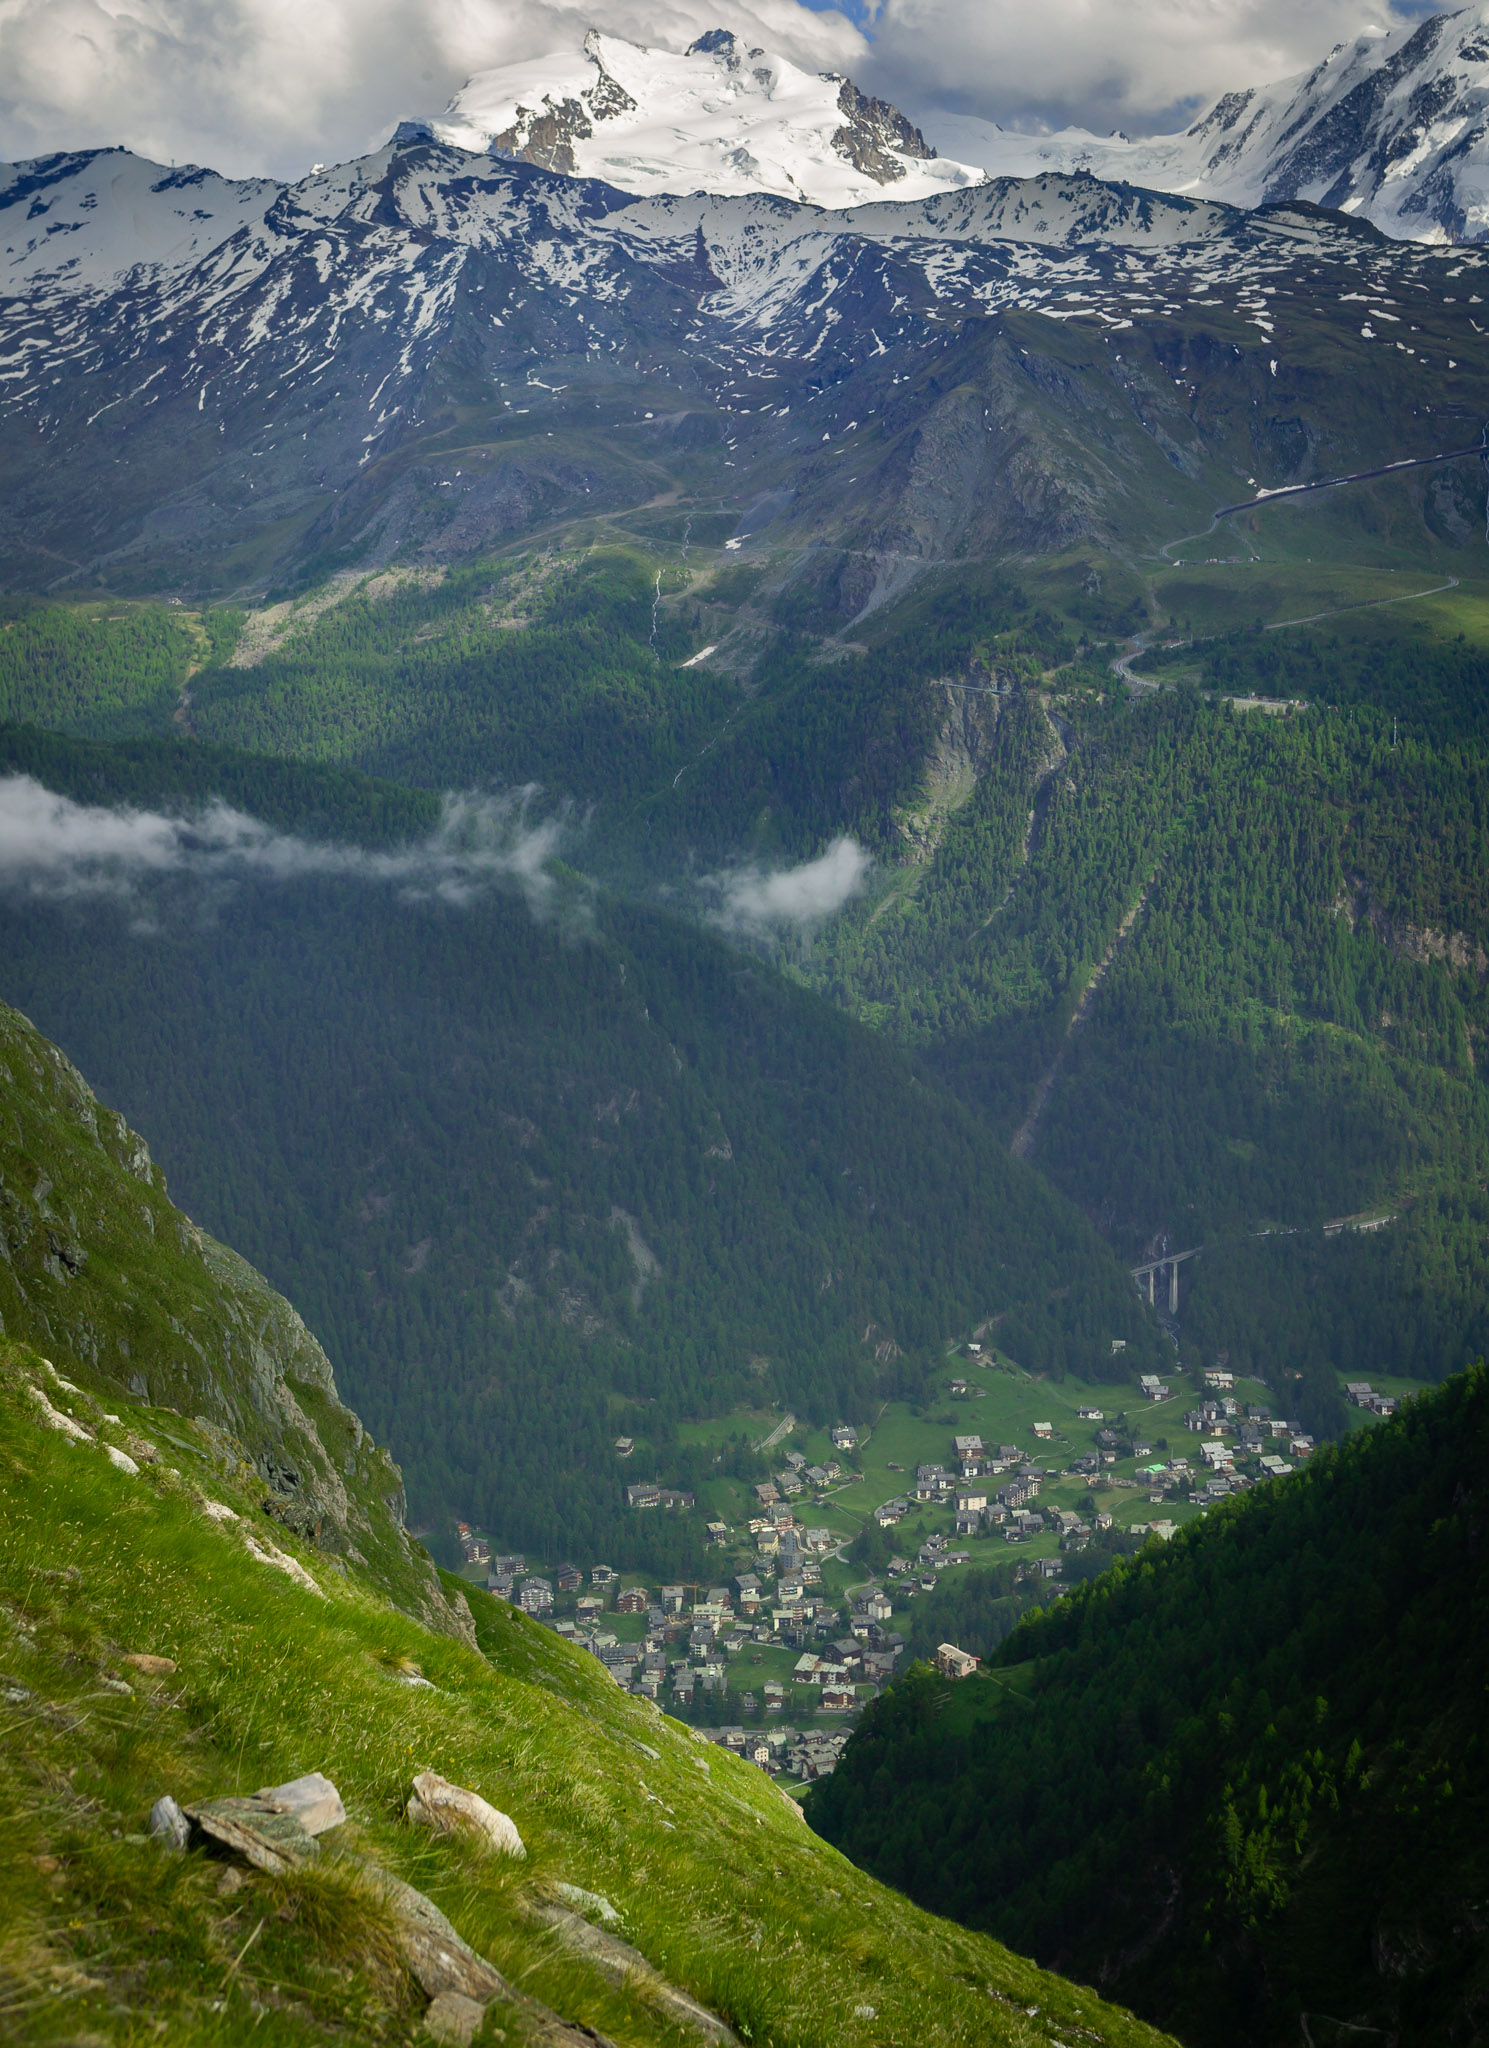 View down to Zermatt from above Trift